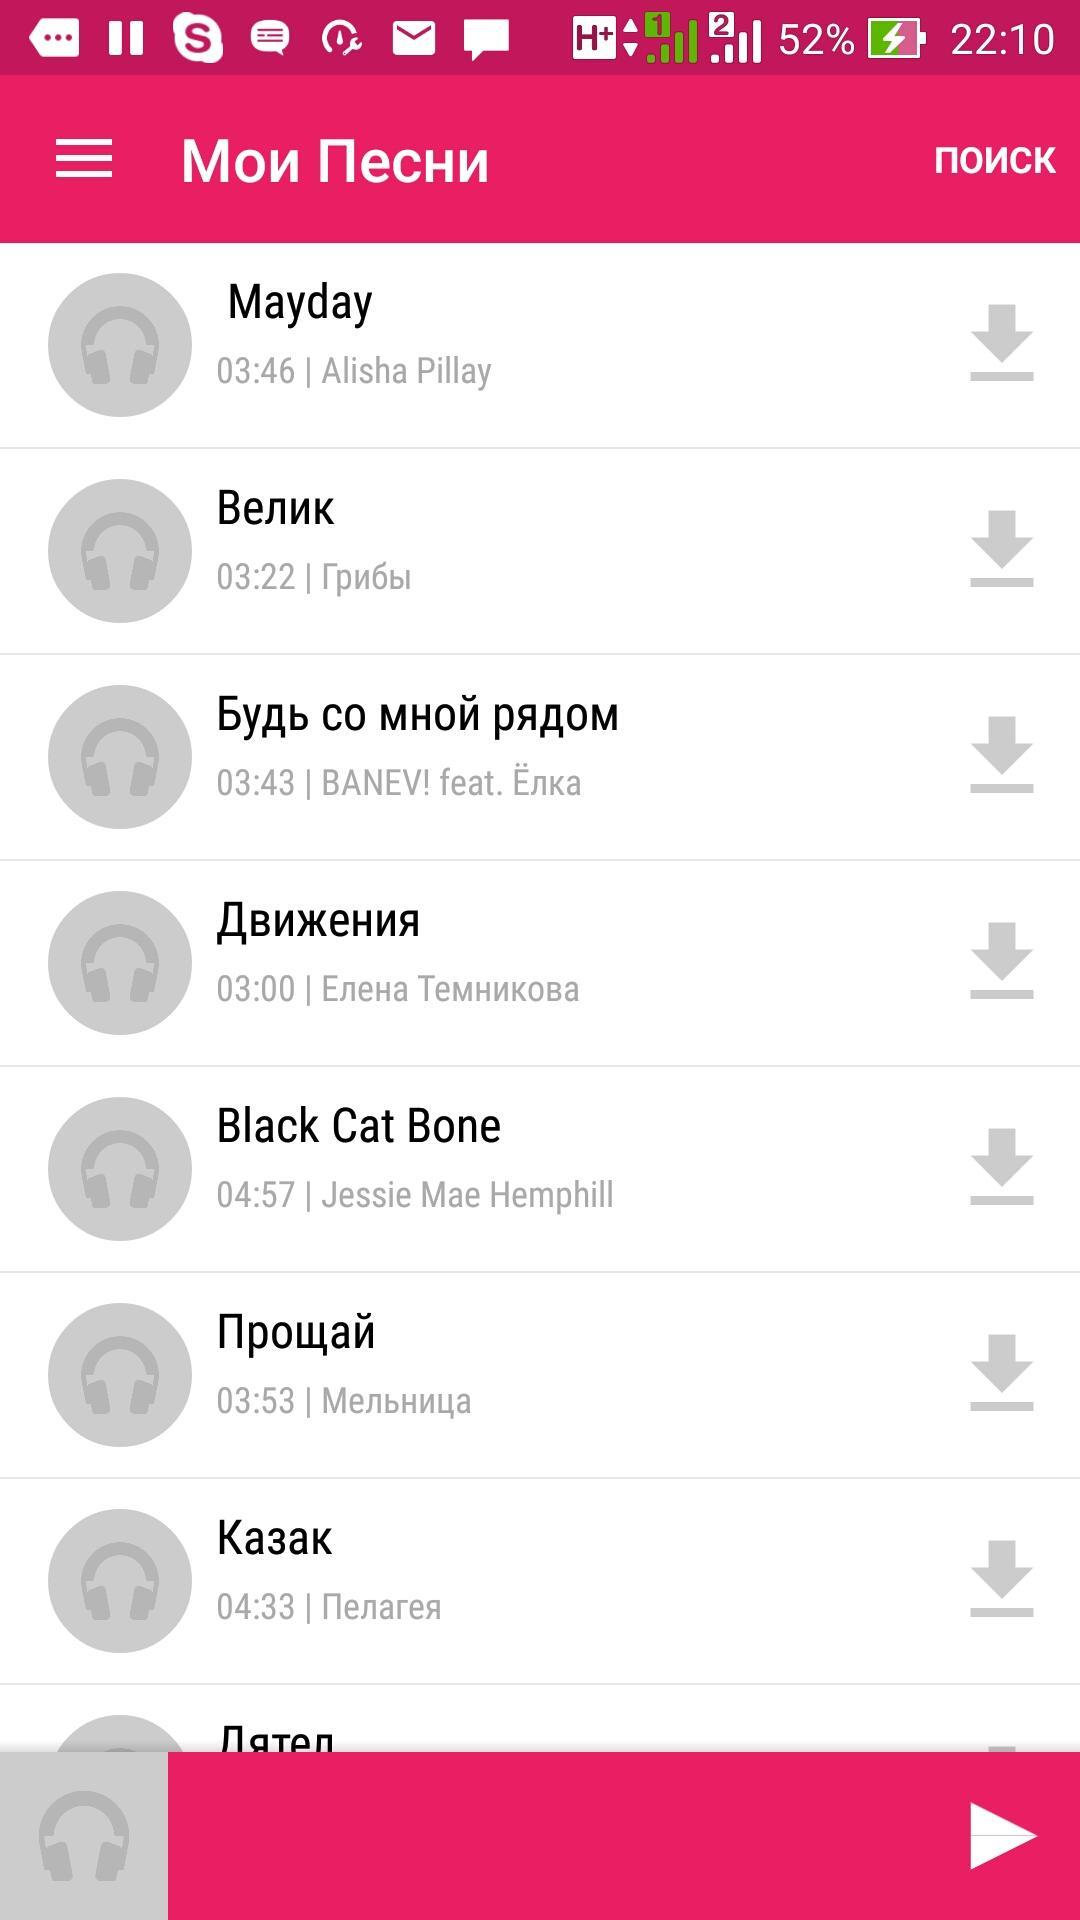 Скачать Музыку Вконтакте For Android - APK Download